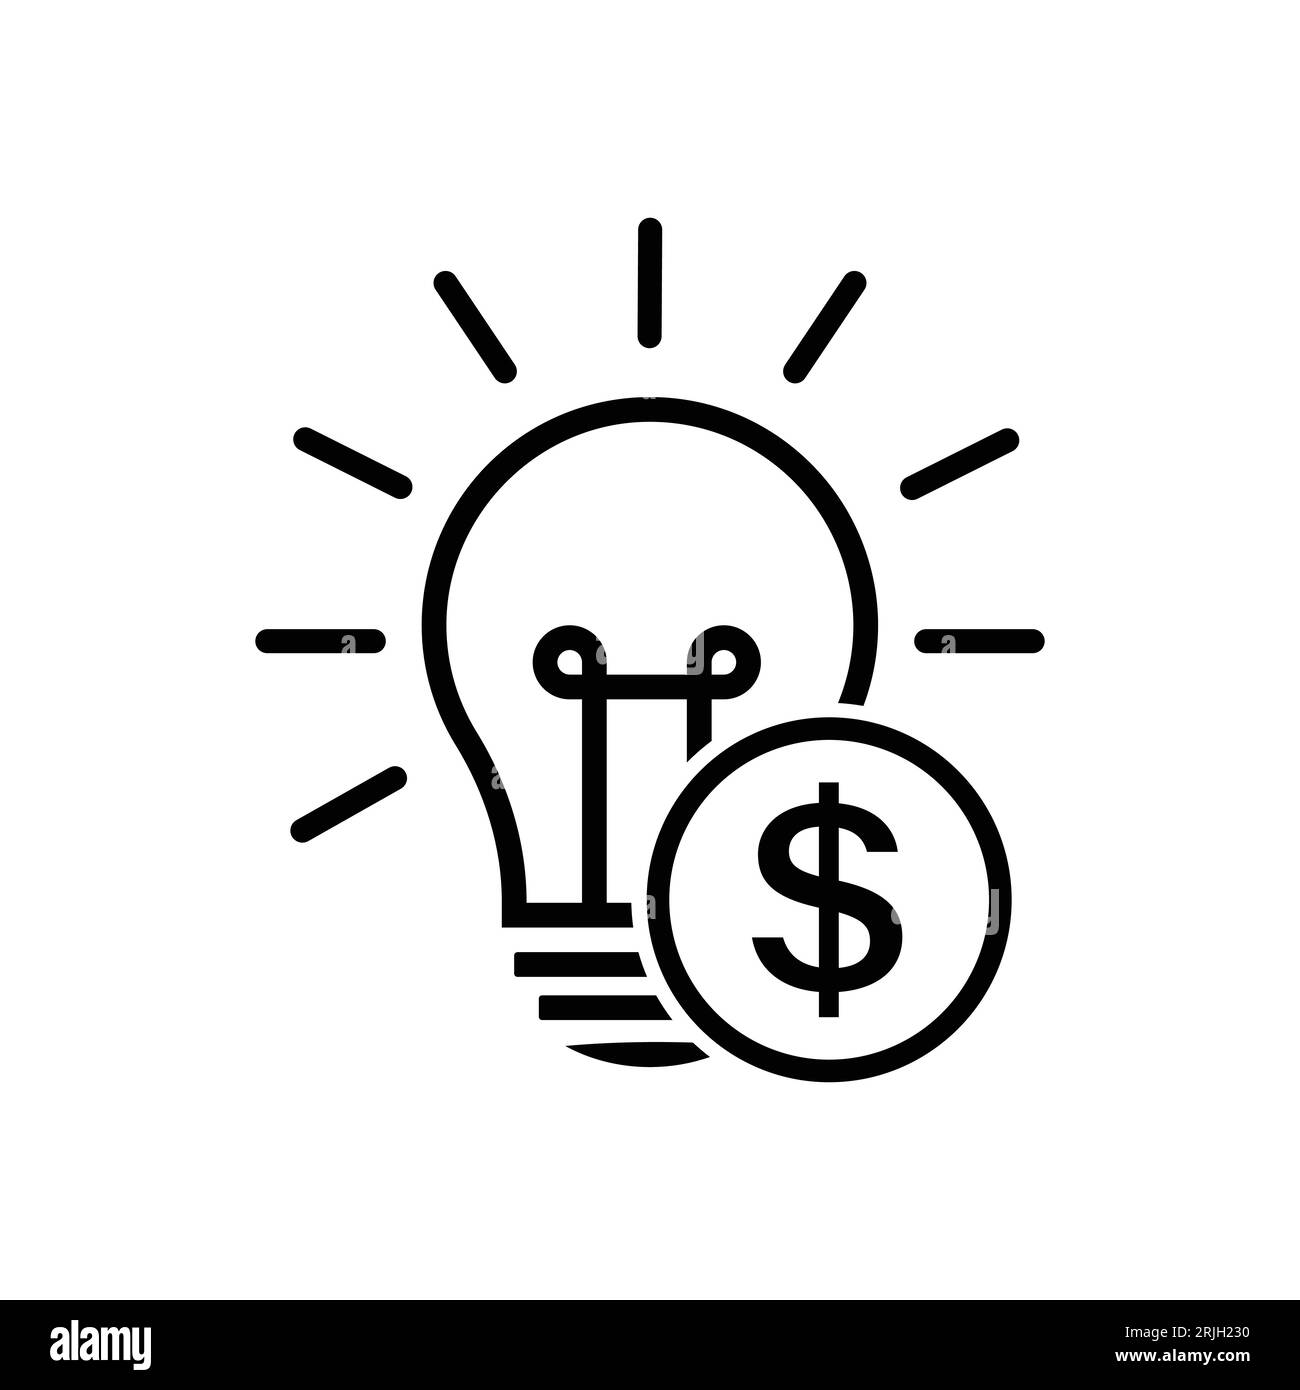 money idea icon, business light, dollar with light bulb, thin line symbol on white background - editable stroke vector illustration Stock Vector